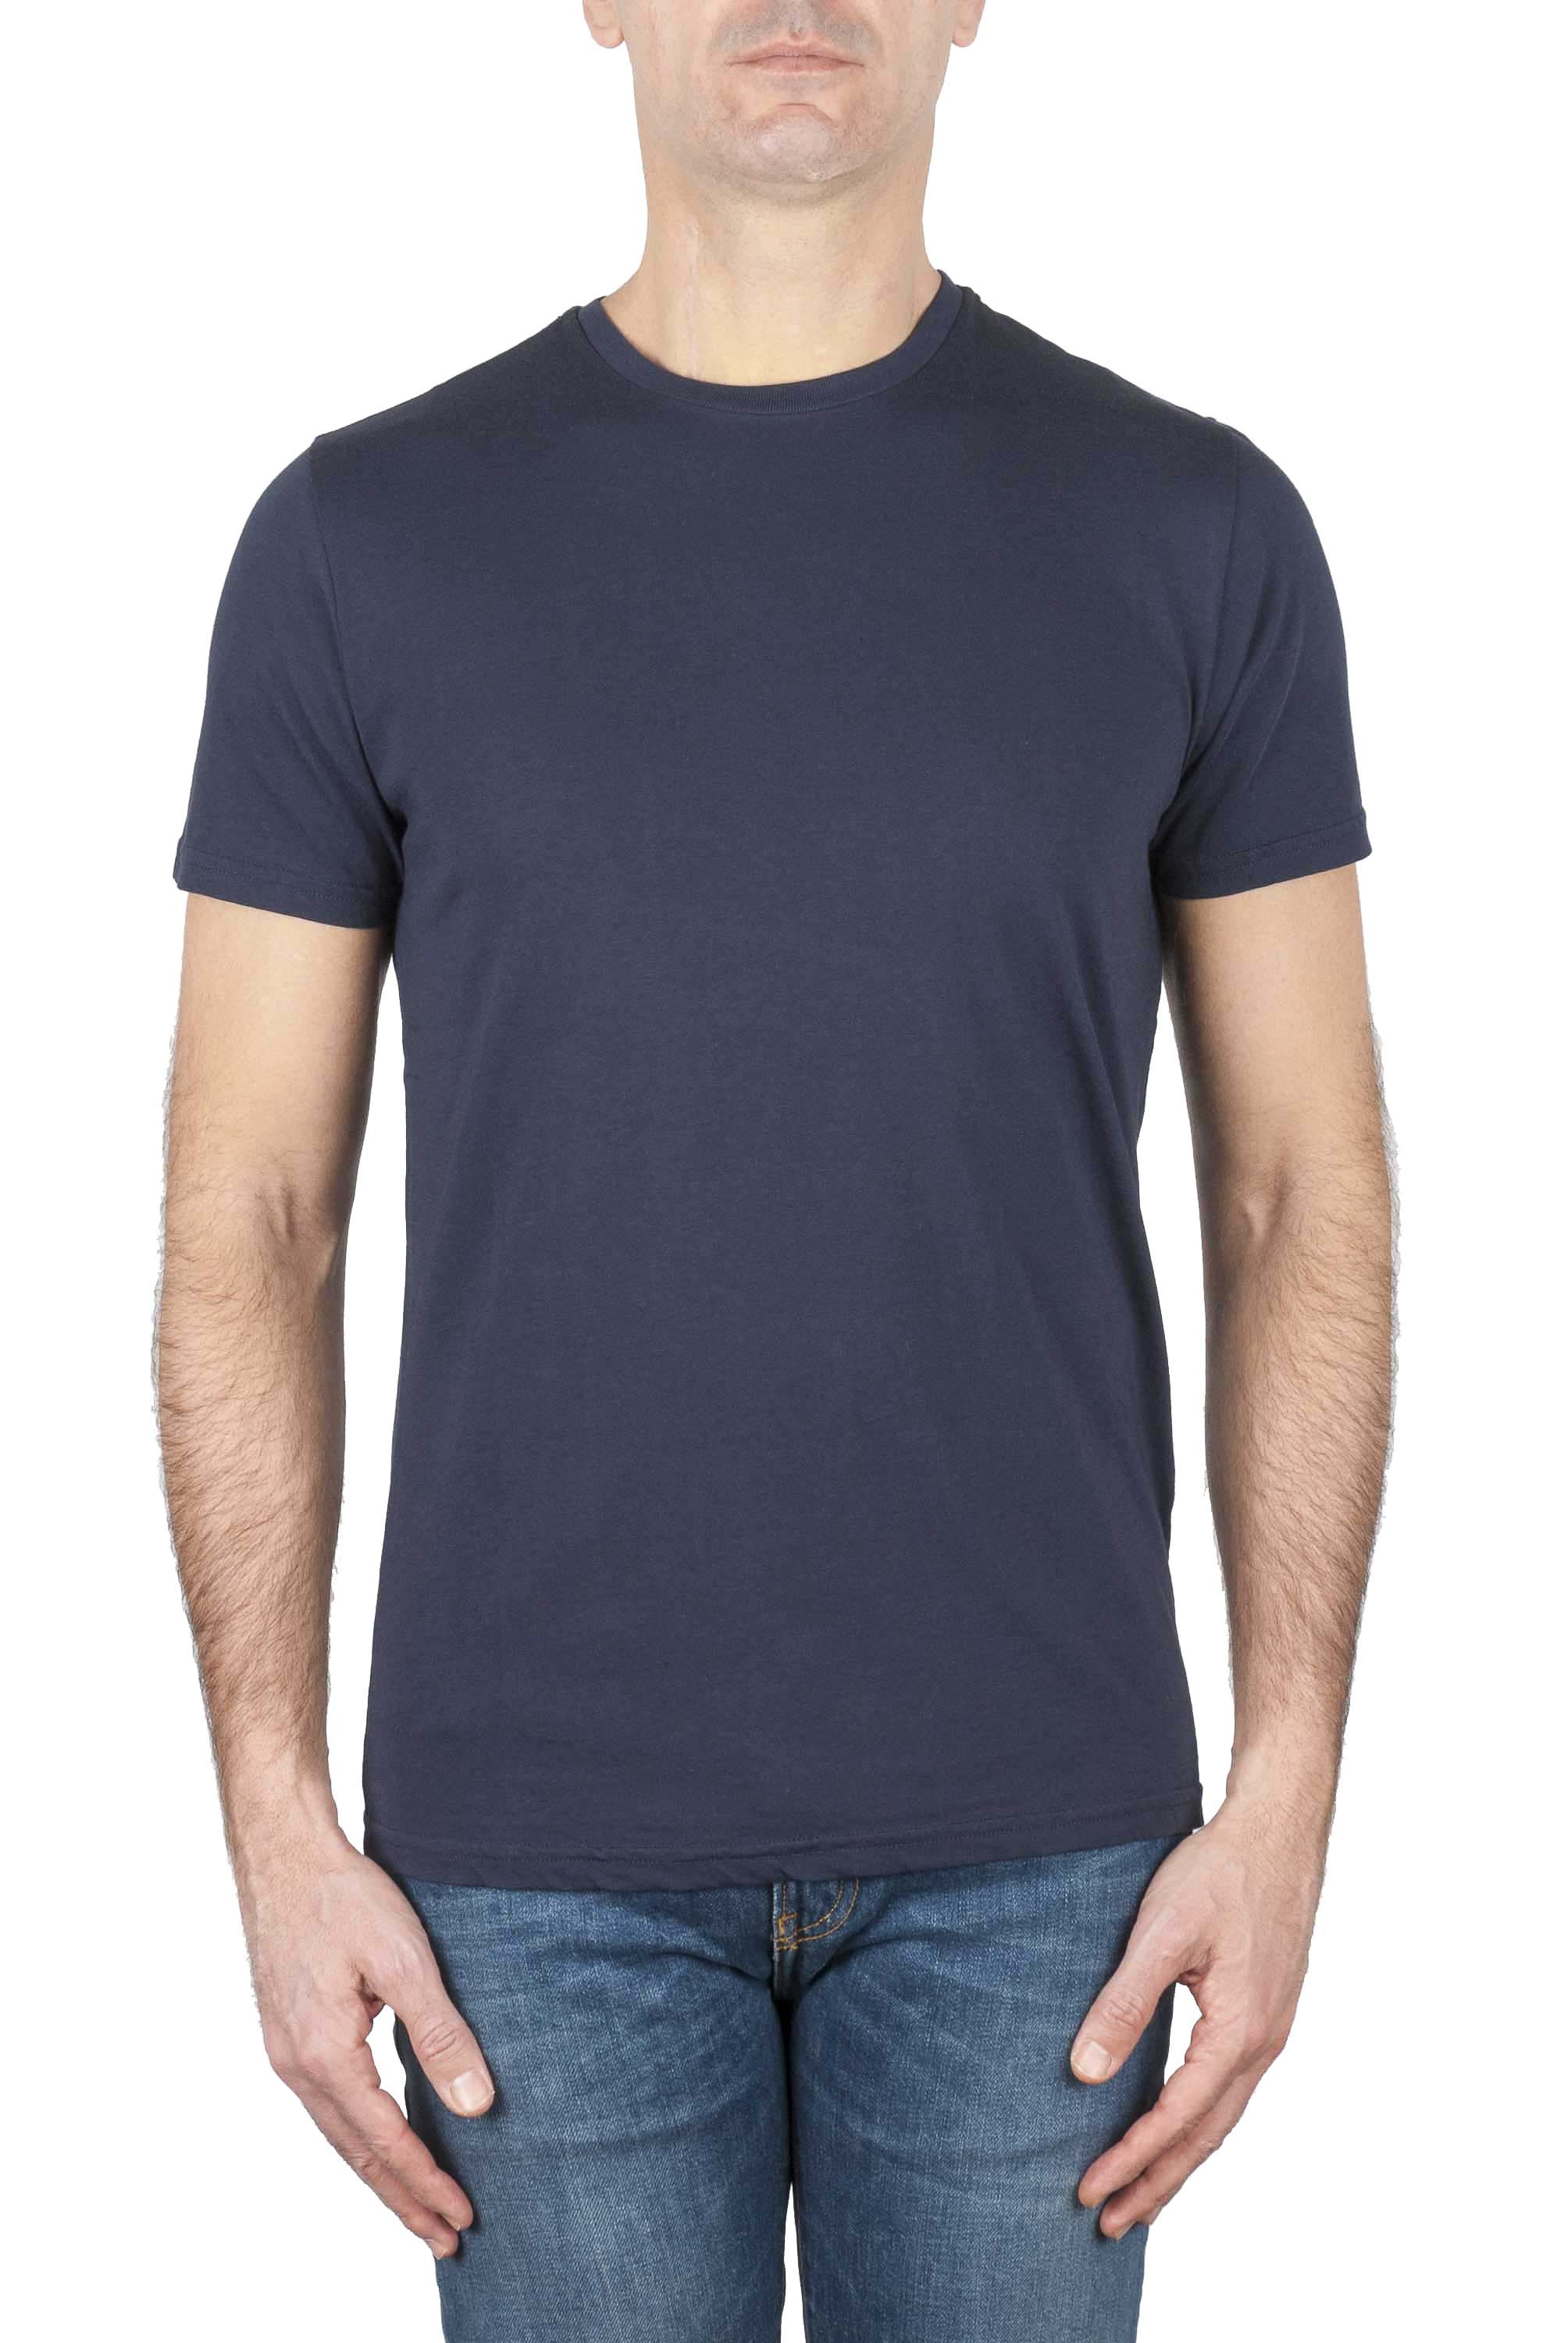 SBU 01750_19AW T-shirt girocollo classica a maniche corte in cotone blu navy 01